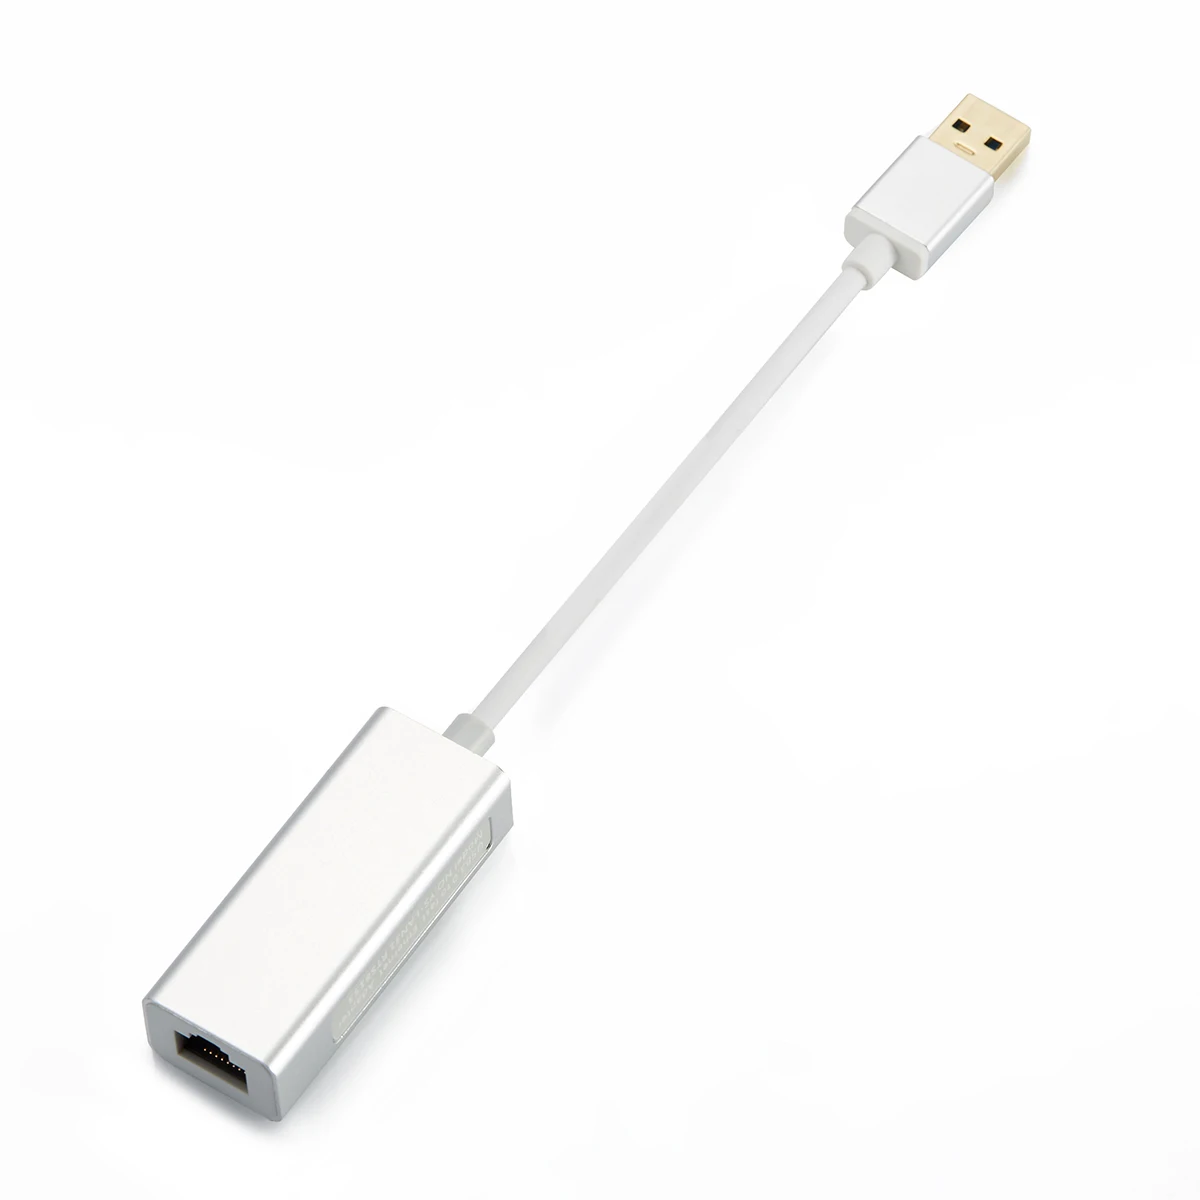 USB2.0 to RJ45 cable adapter/ USB Ethernet Network Lan co<i></i>nverter for laptop computer tablet